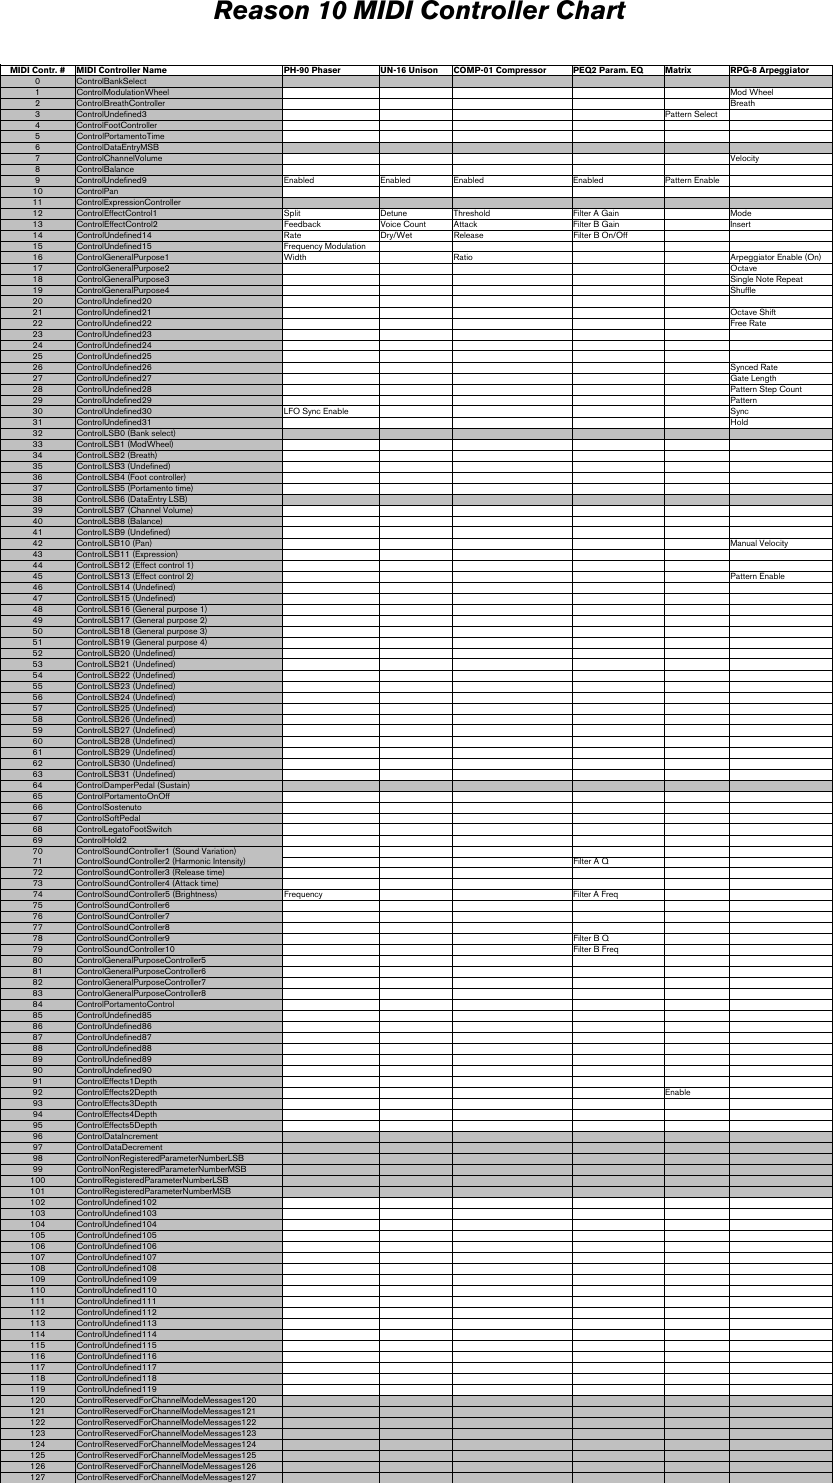 Page 7 of 9 - Reason 10 MIDI Implementation Chart - 10.0 EN